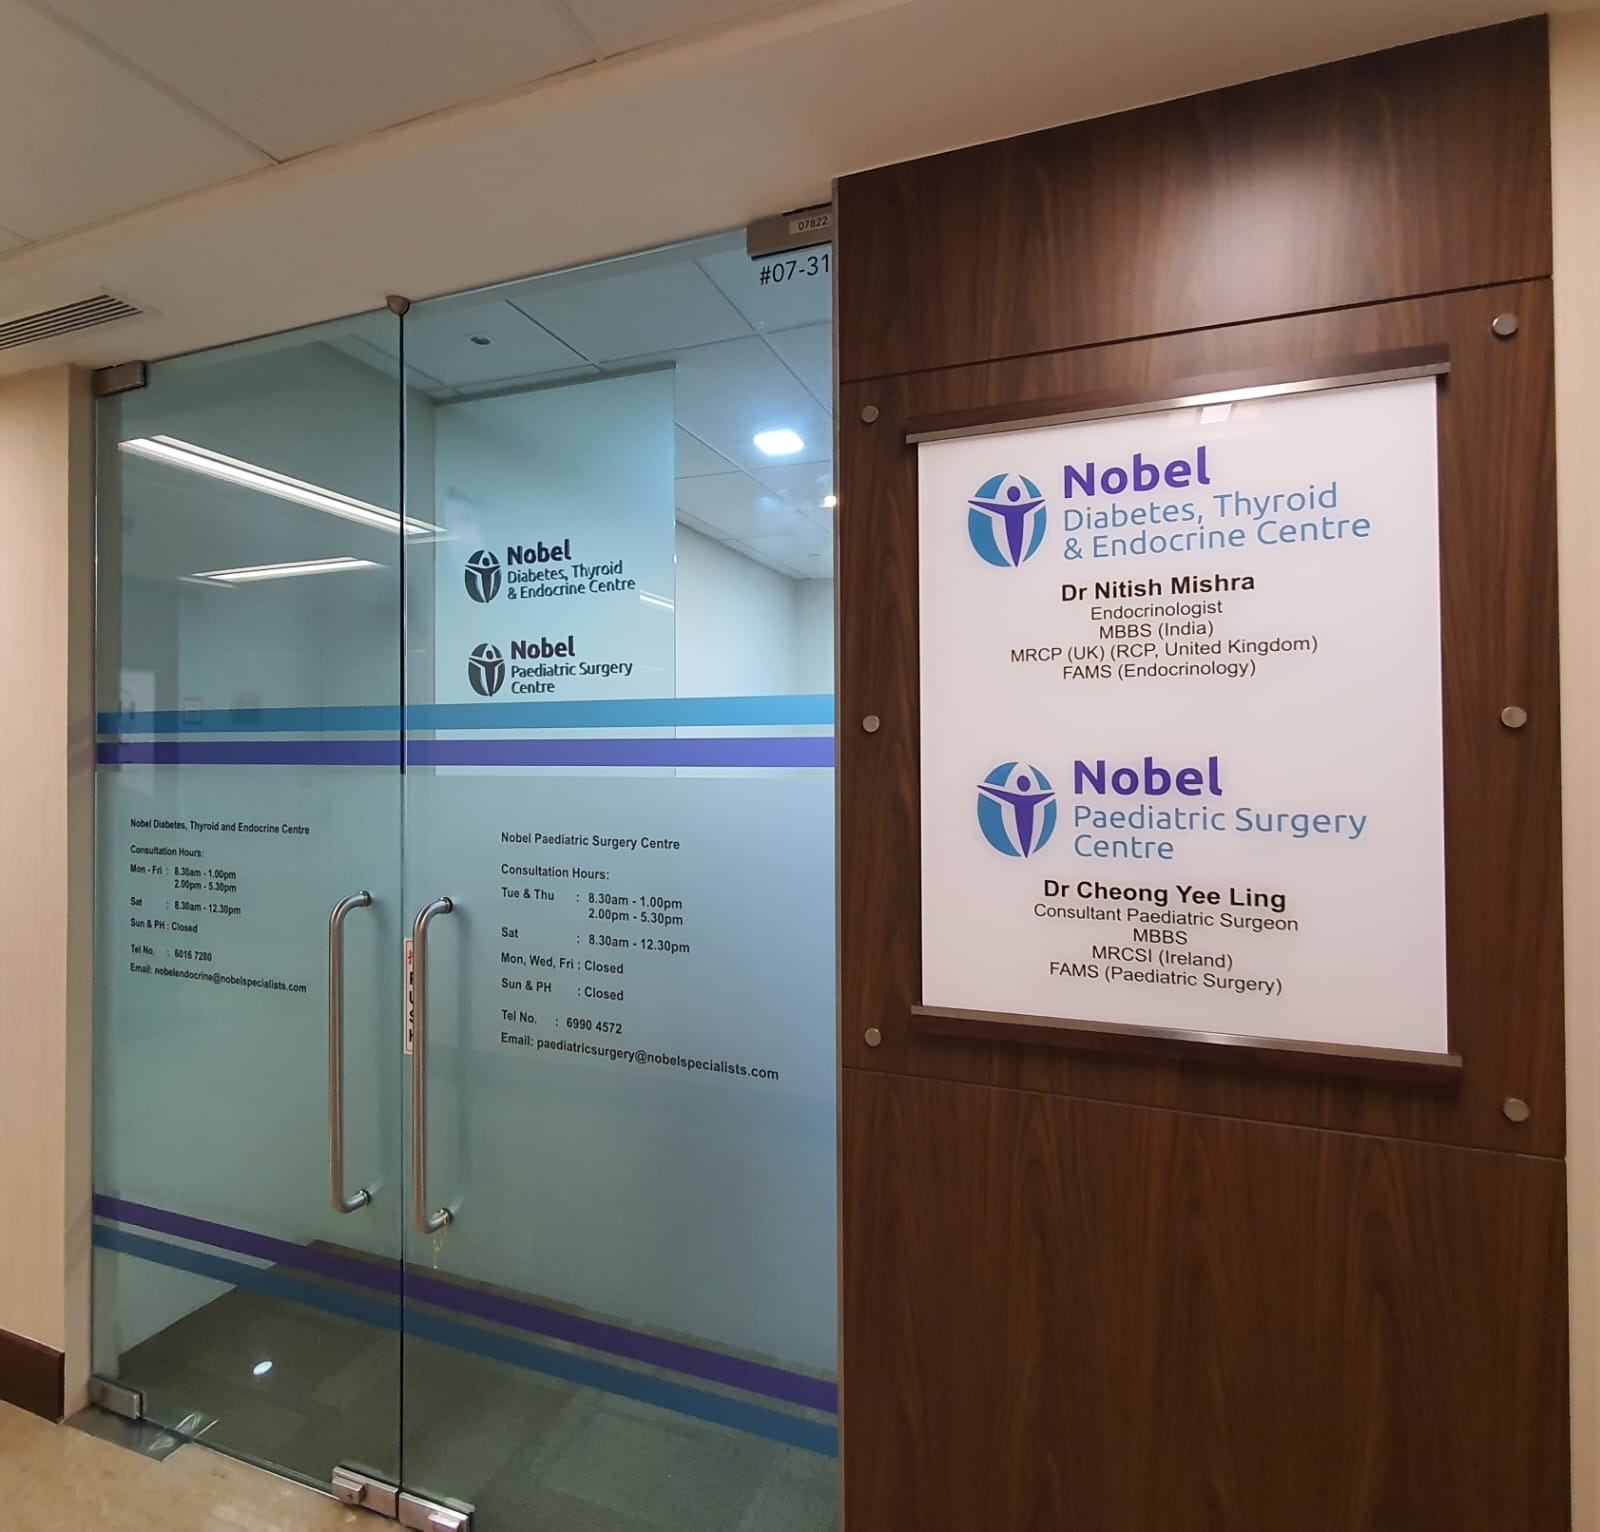 Nobel diabetes, thyroid & endocrine centre & nobel paediatric surgery centre storefront